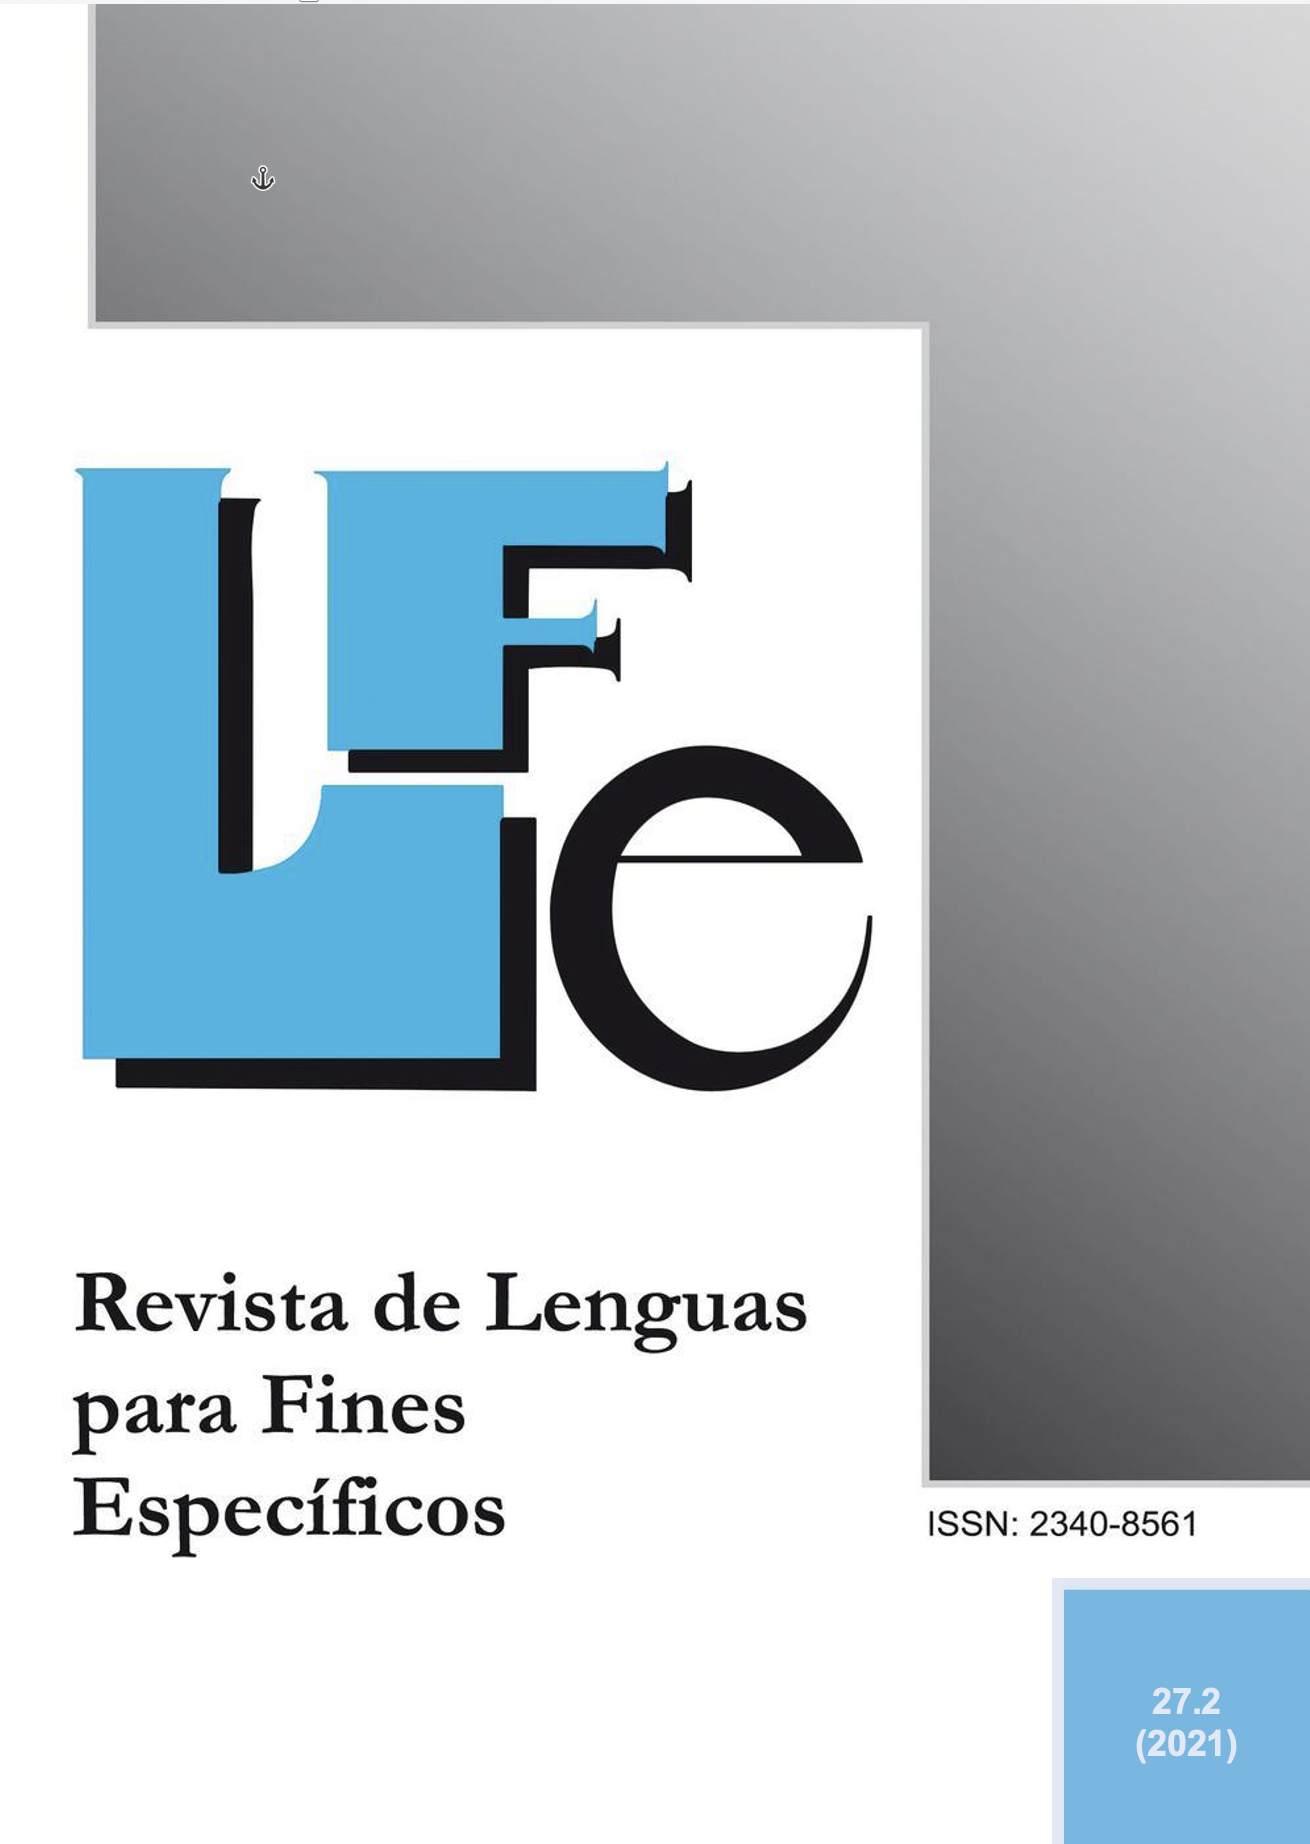 					View Vol. 27 No. 2 (2021): Revista de lenguas para fines específicos
				